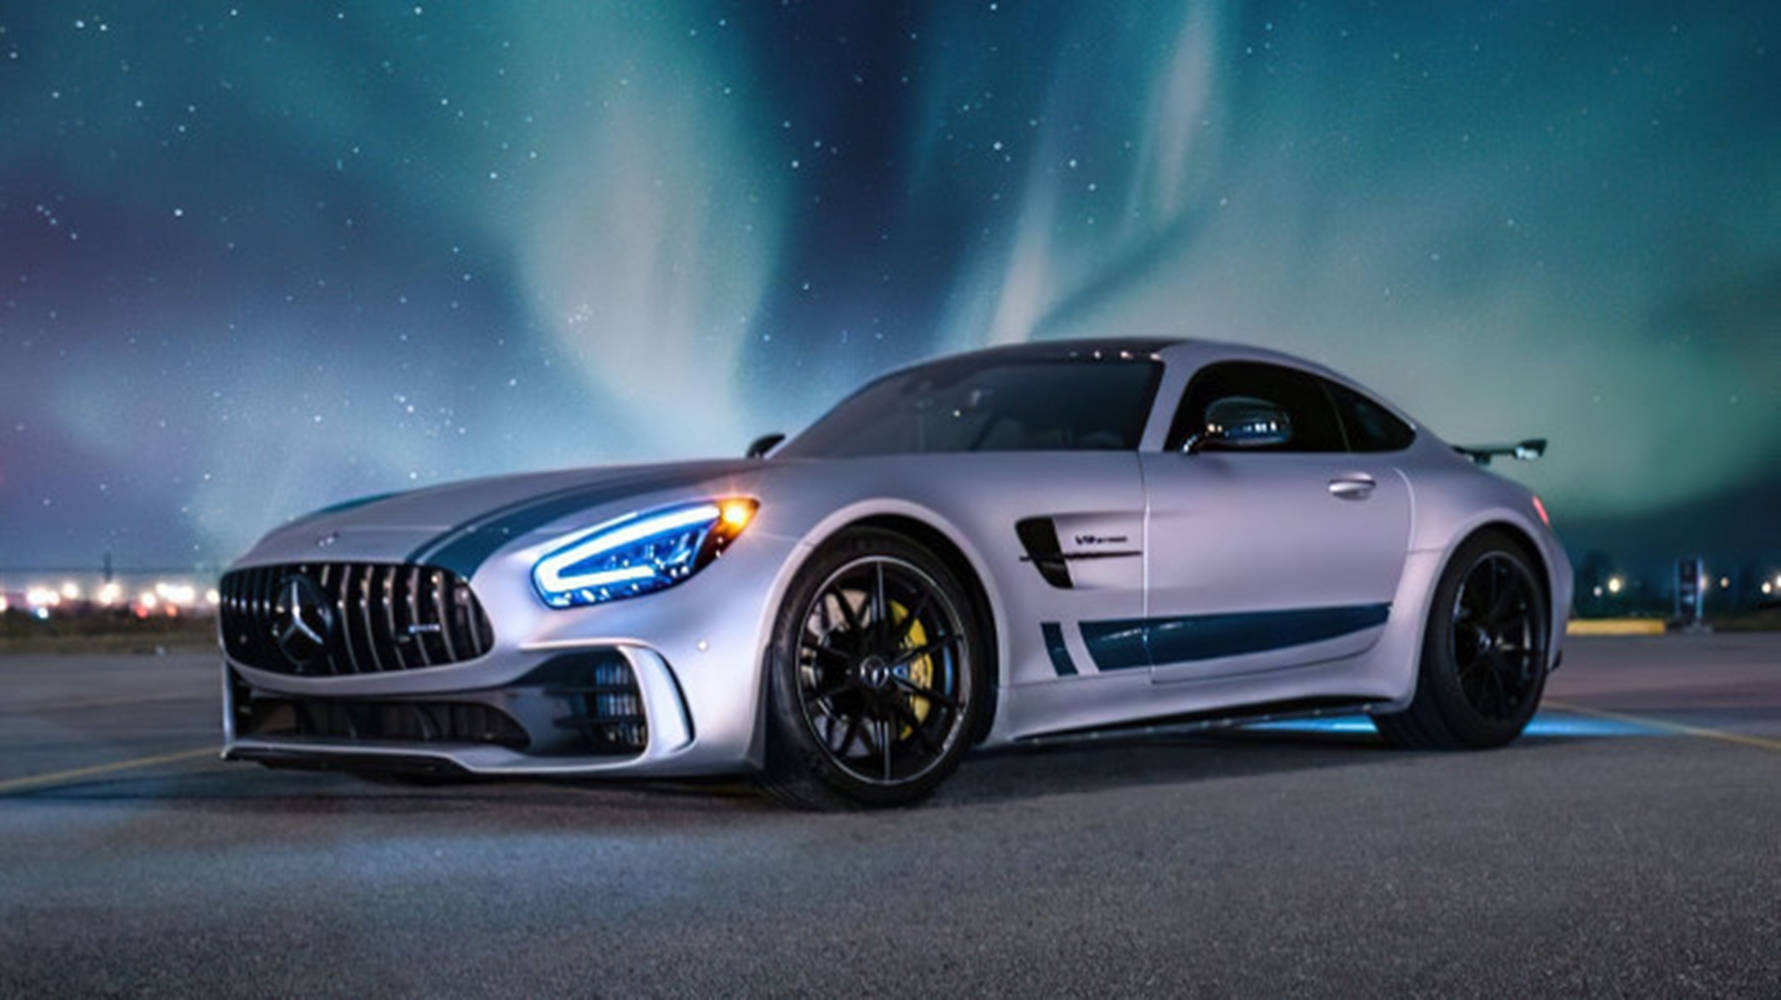 2021 Mercedes AMG GTR Beneath Aurora Borealis Wallpaper